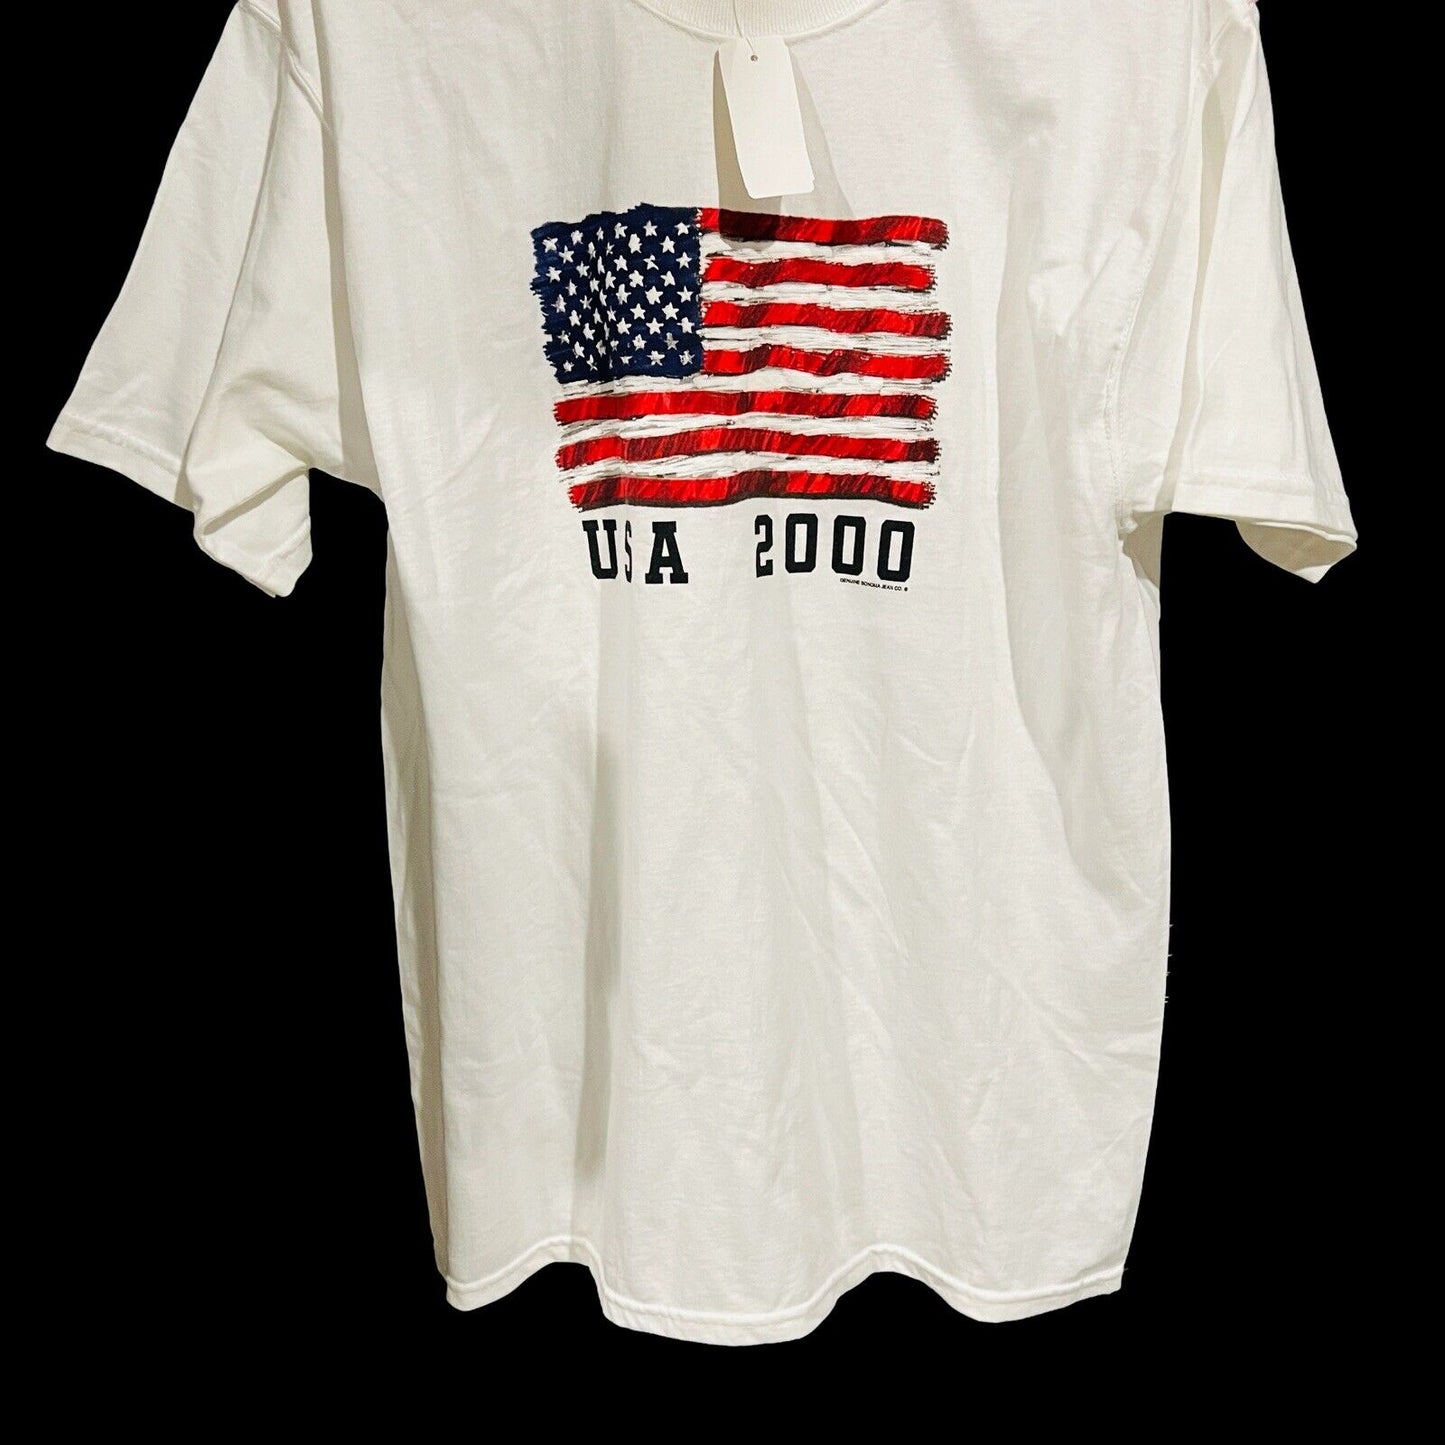 Sonoma Men's Large T-shirt Jeans American flag vintage White USA 2000 Company